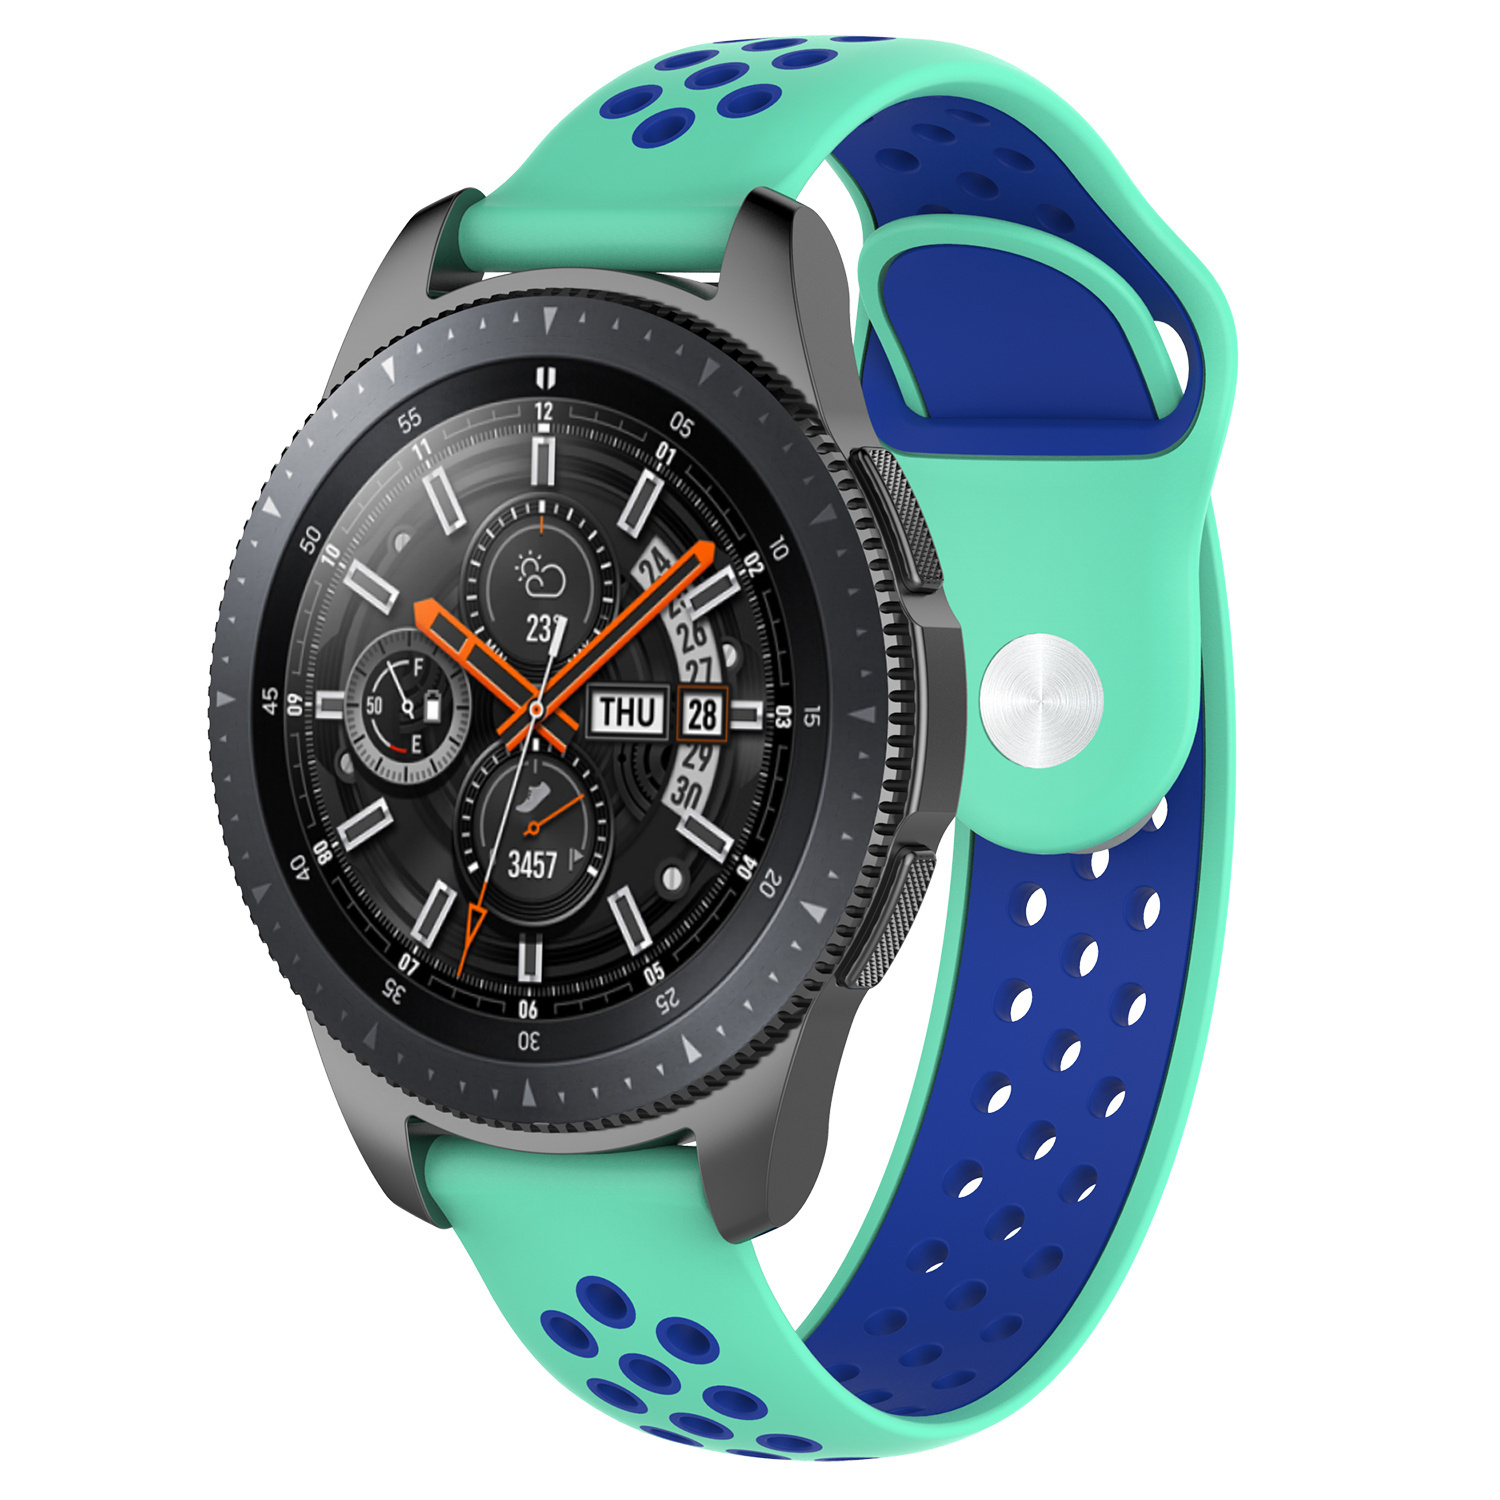 Samsung Galaxy Watch dupla sport szíj - kék színű